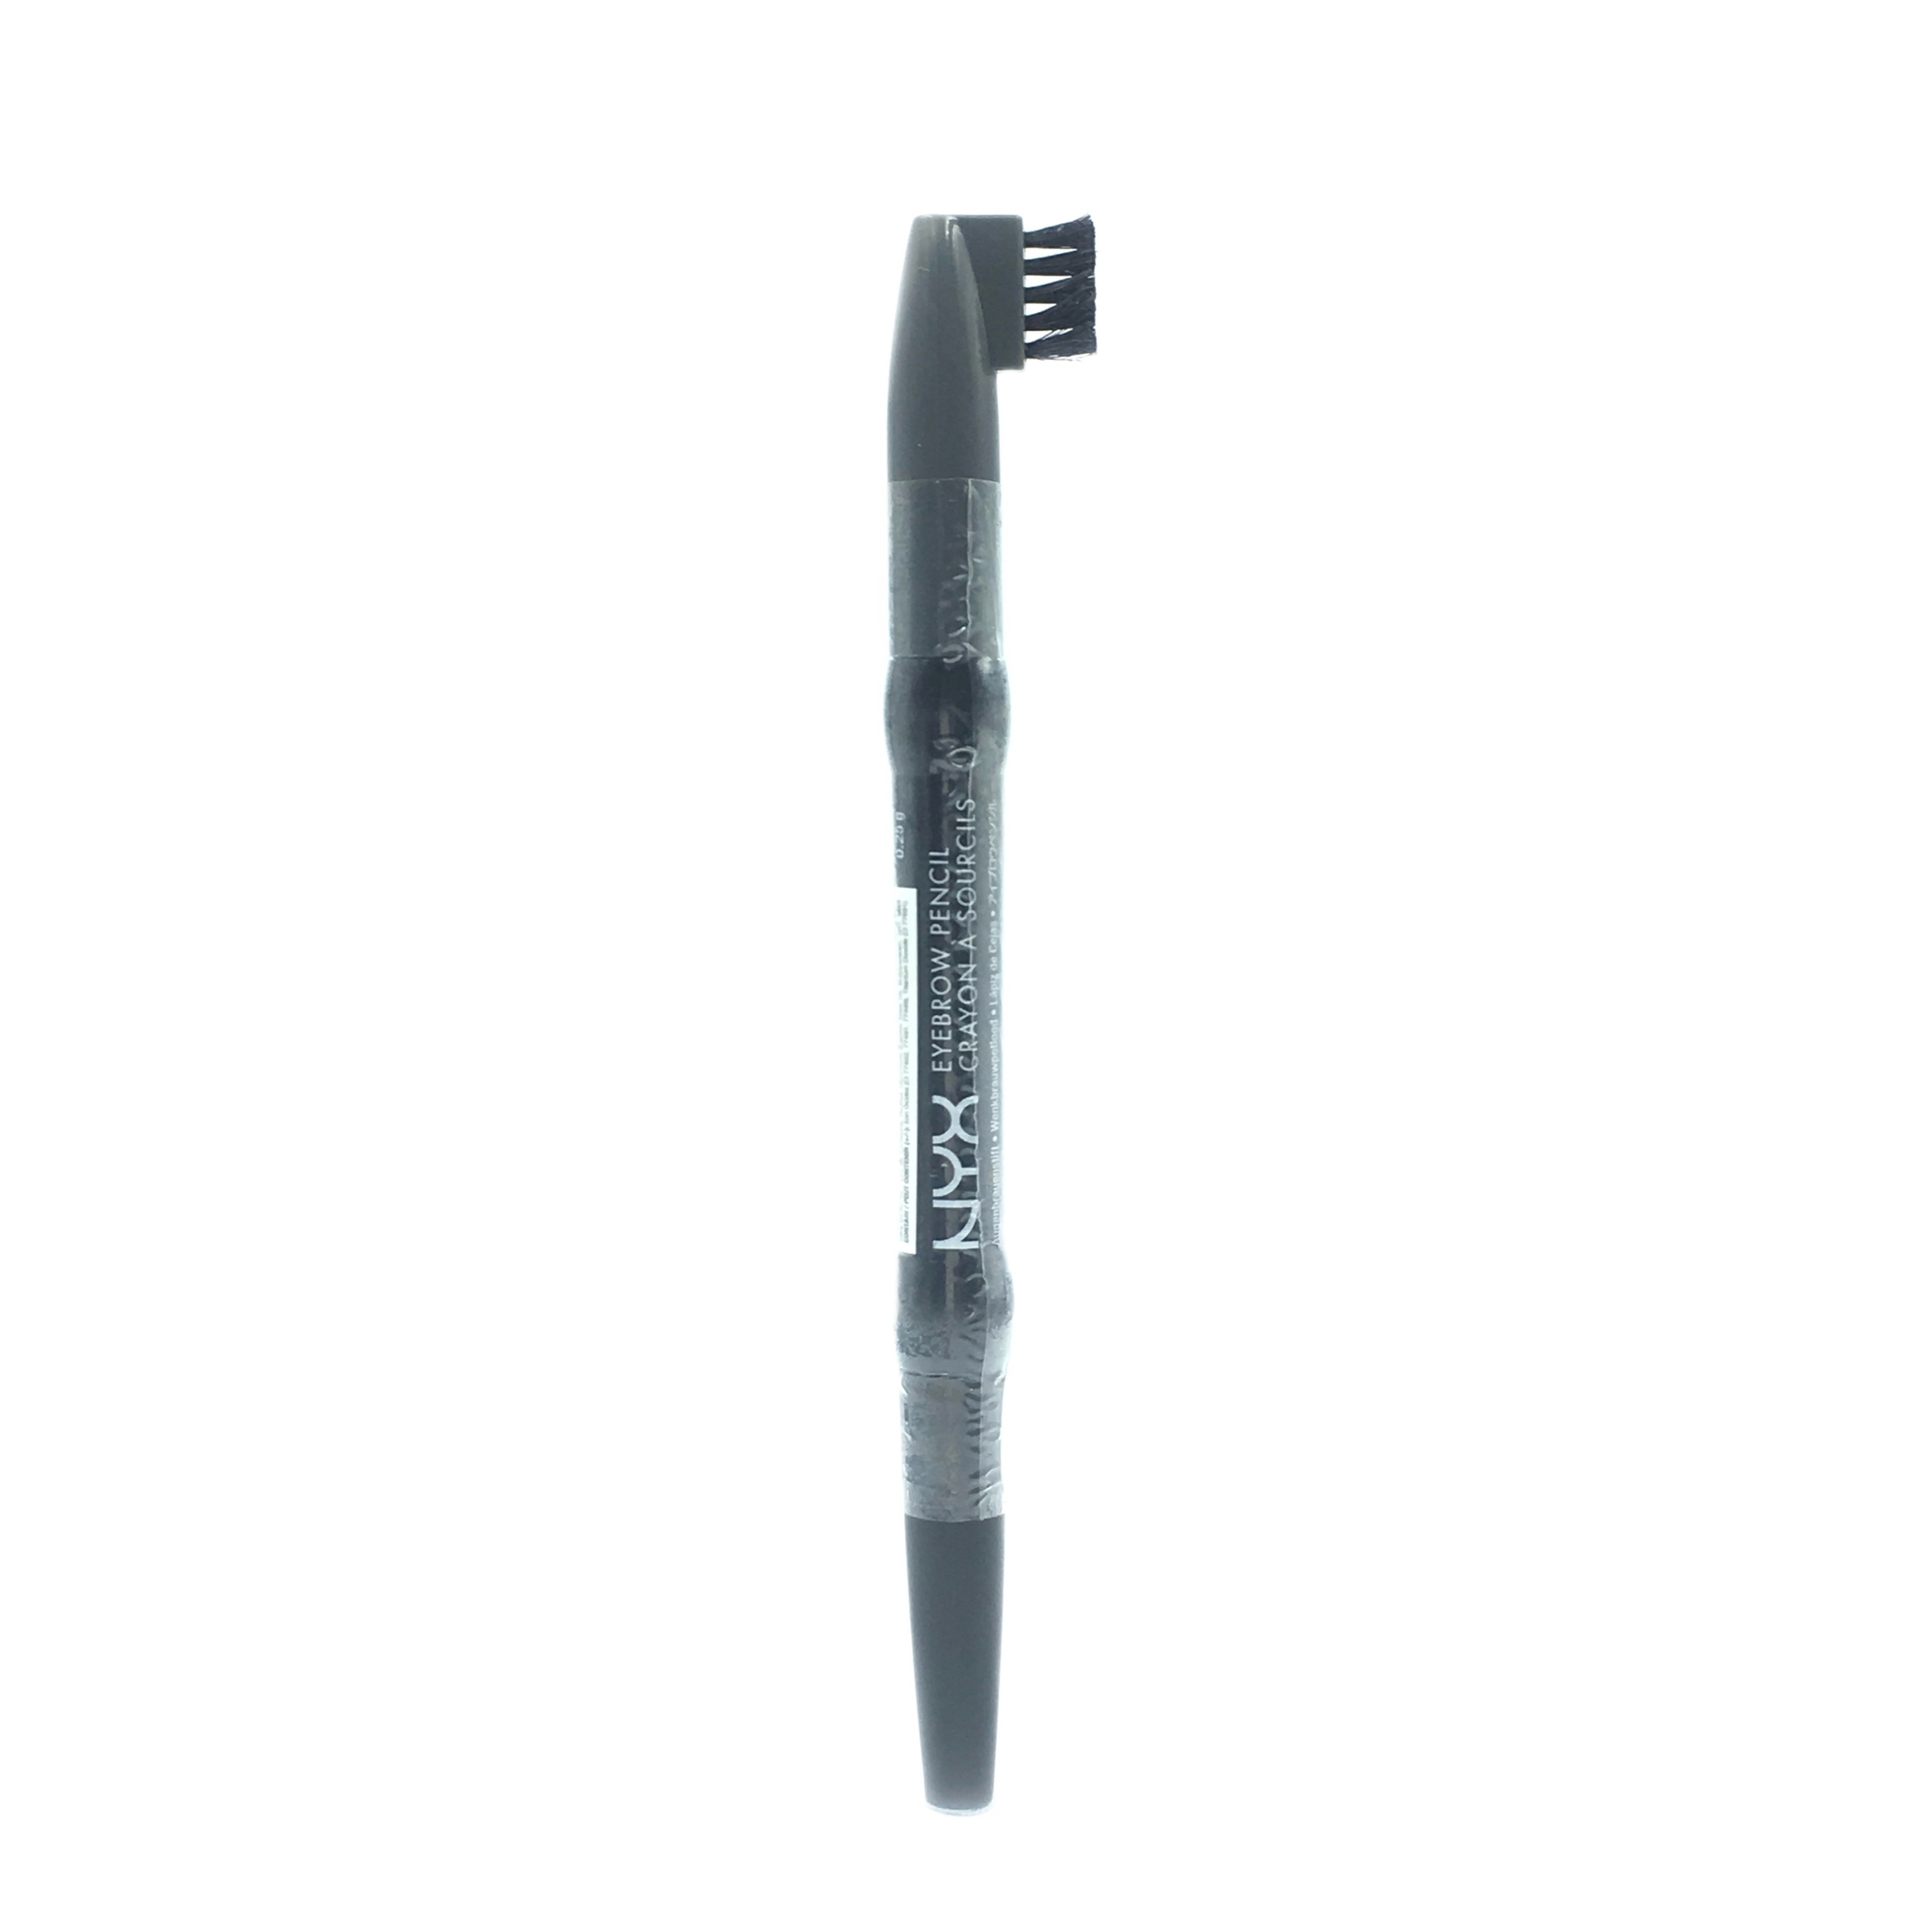 NYX Eyebrow Pencil Crayon & Sourcils EP07 Charcoal/Anthracite Eyes